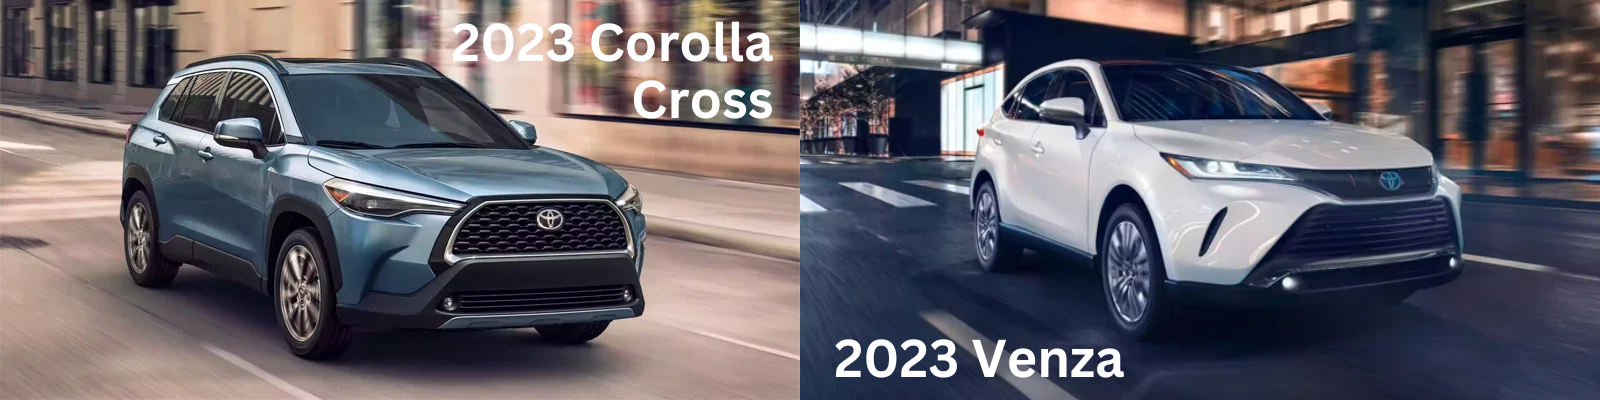 2023 Toyota Corolla Cross vs 2023 Toyota Venza in Columbus, OH